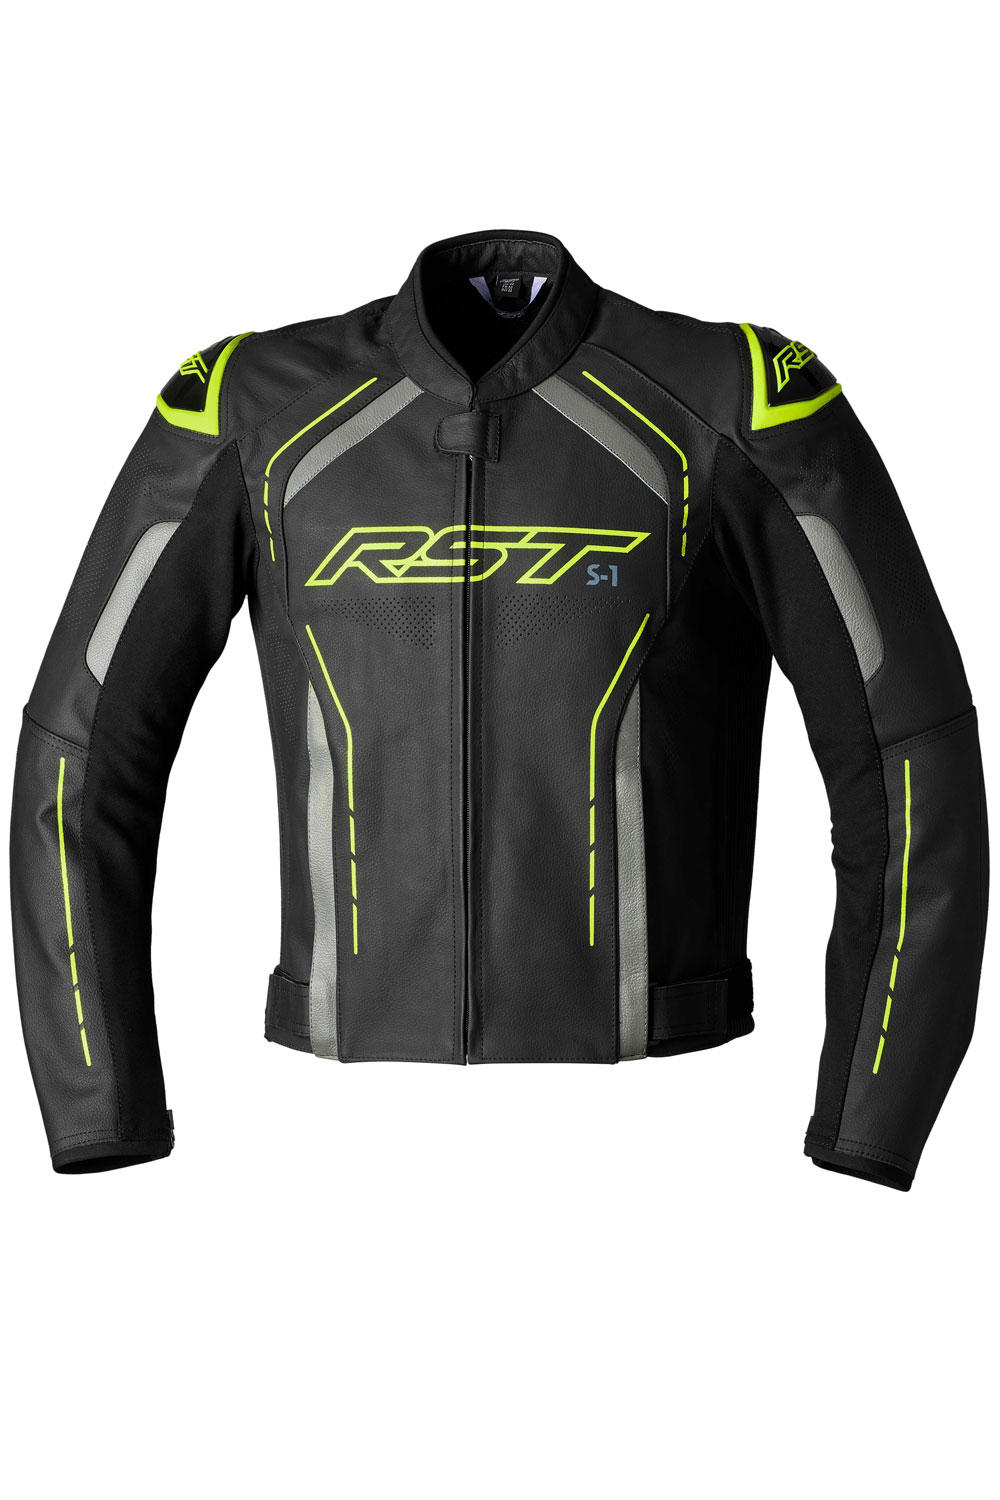 S-1 CE Mens Leather Jacket | RST Moto